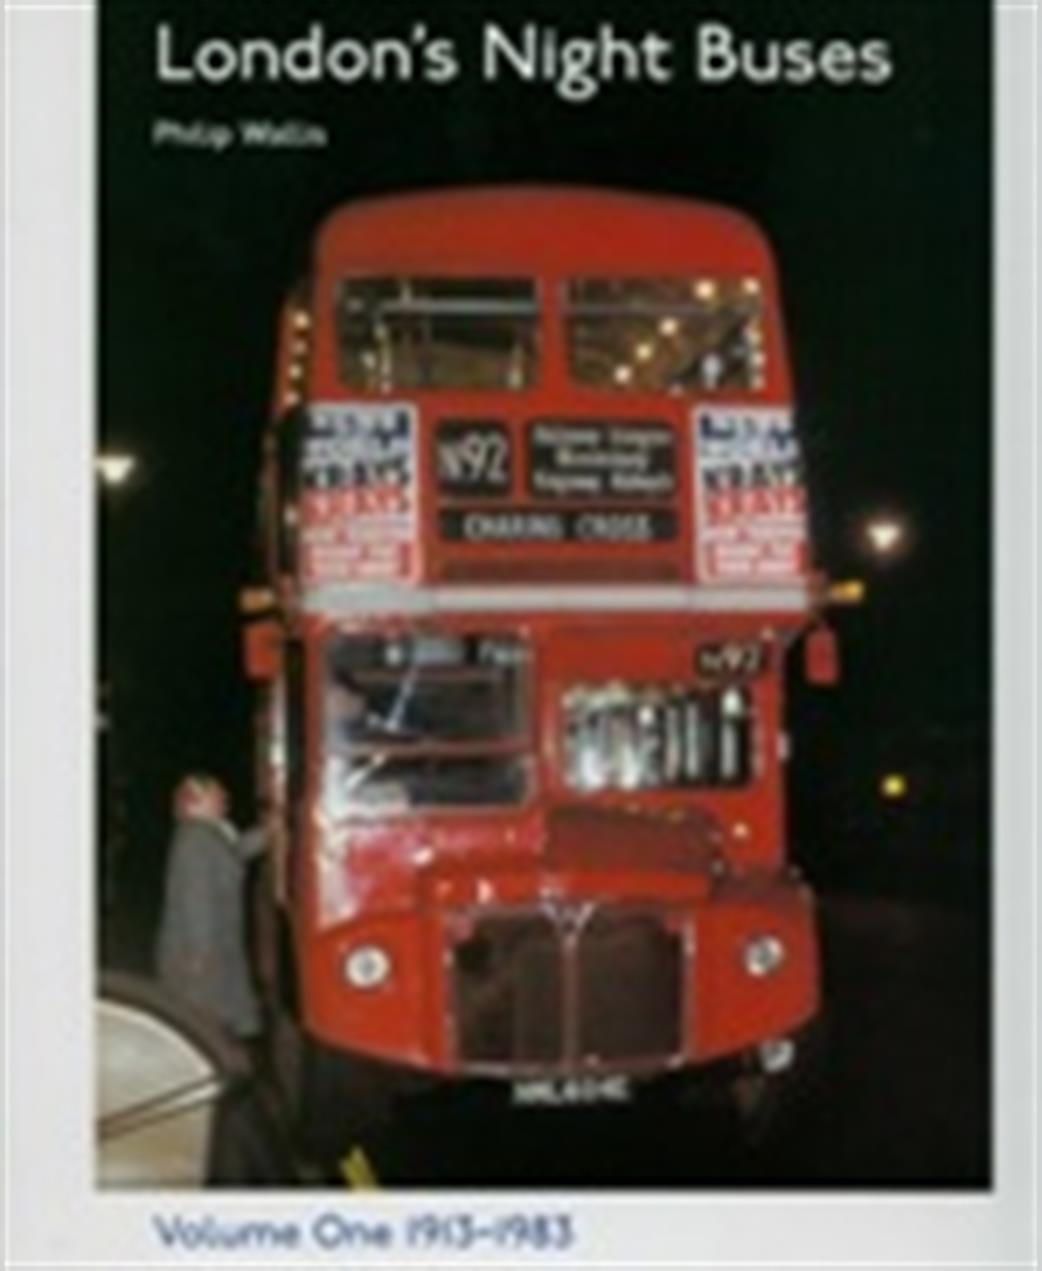 Capital Transport Publishing  9781854143488 London's Night Buses Vol 1 by Philip Wallis